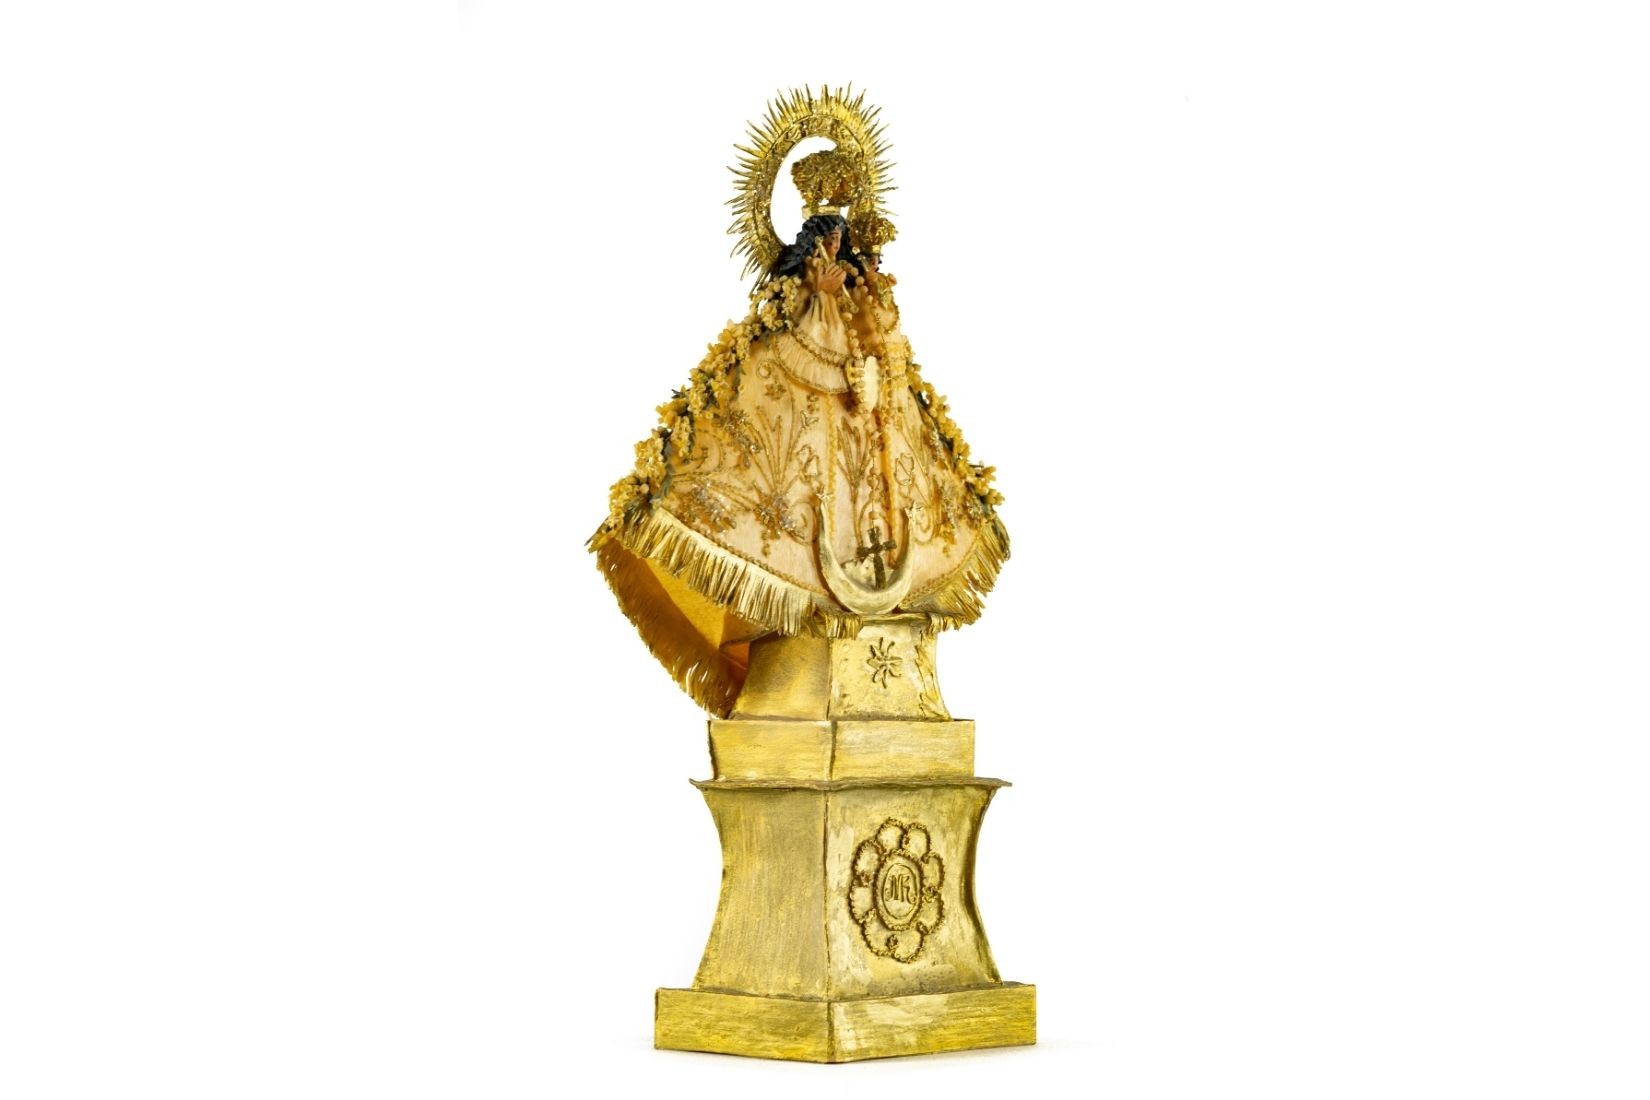 Virgen de Talpa, chilte moldeado y entintado. Artesana Ma. Luz Librada López Morán. Talpa de Allende, Jal. 2000. Col. María Teresa Pomar. (Foto: Nicola Lorusso).